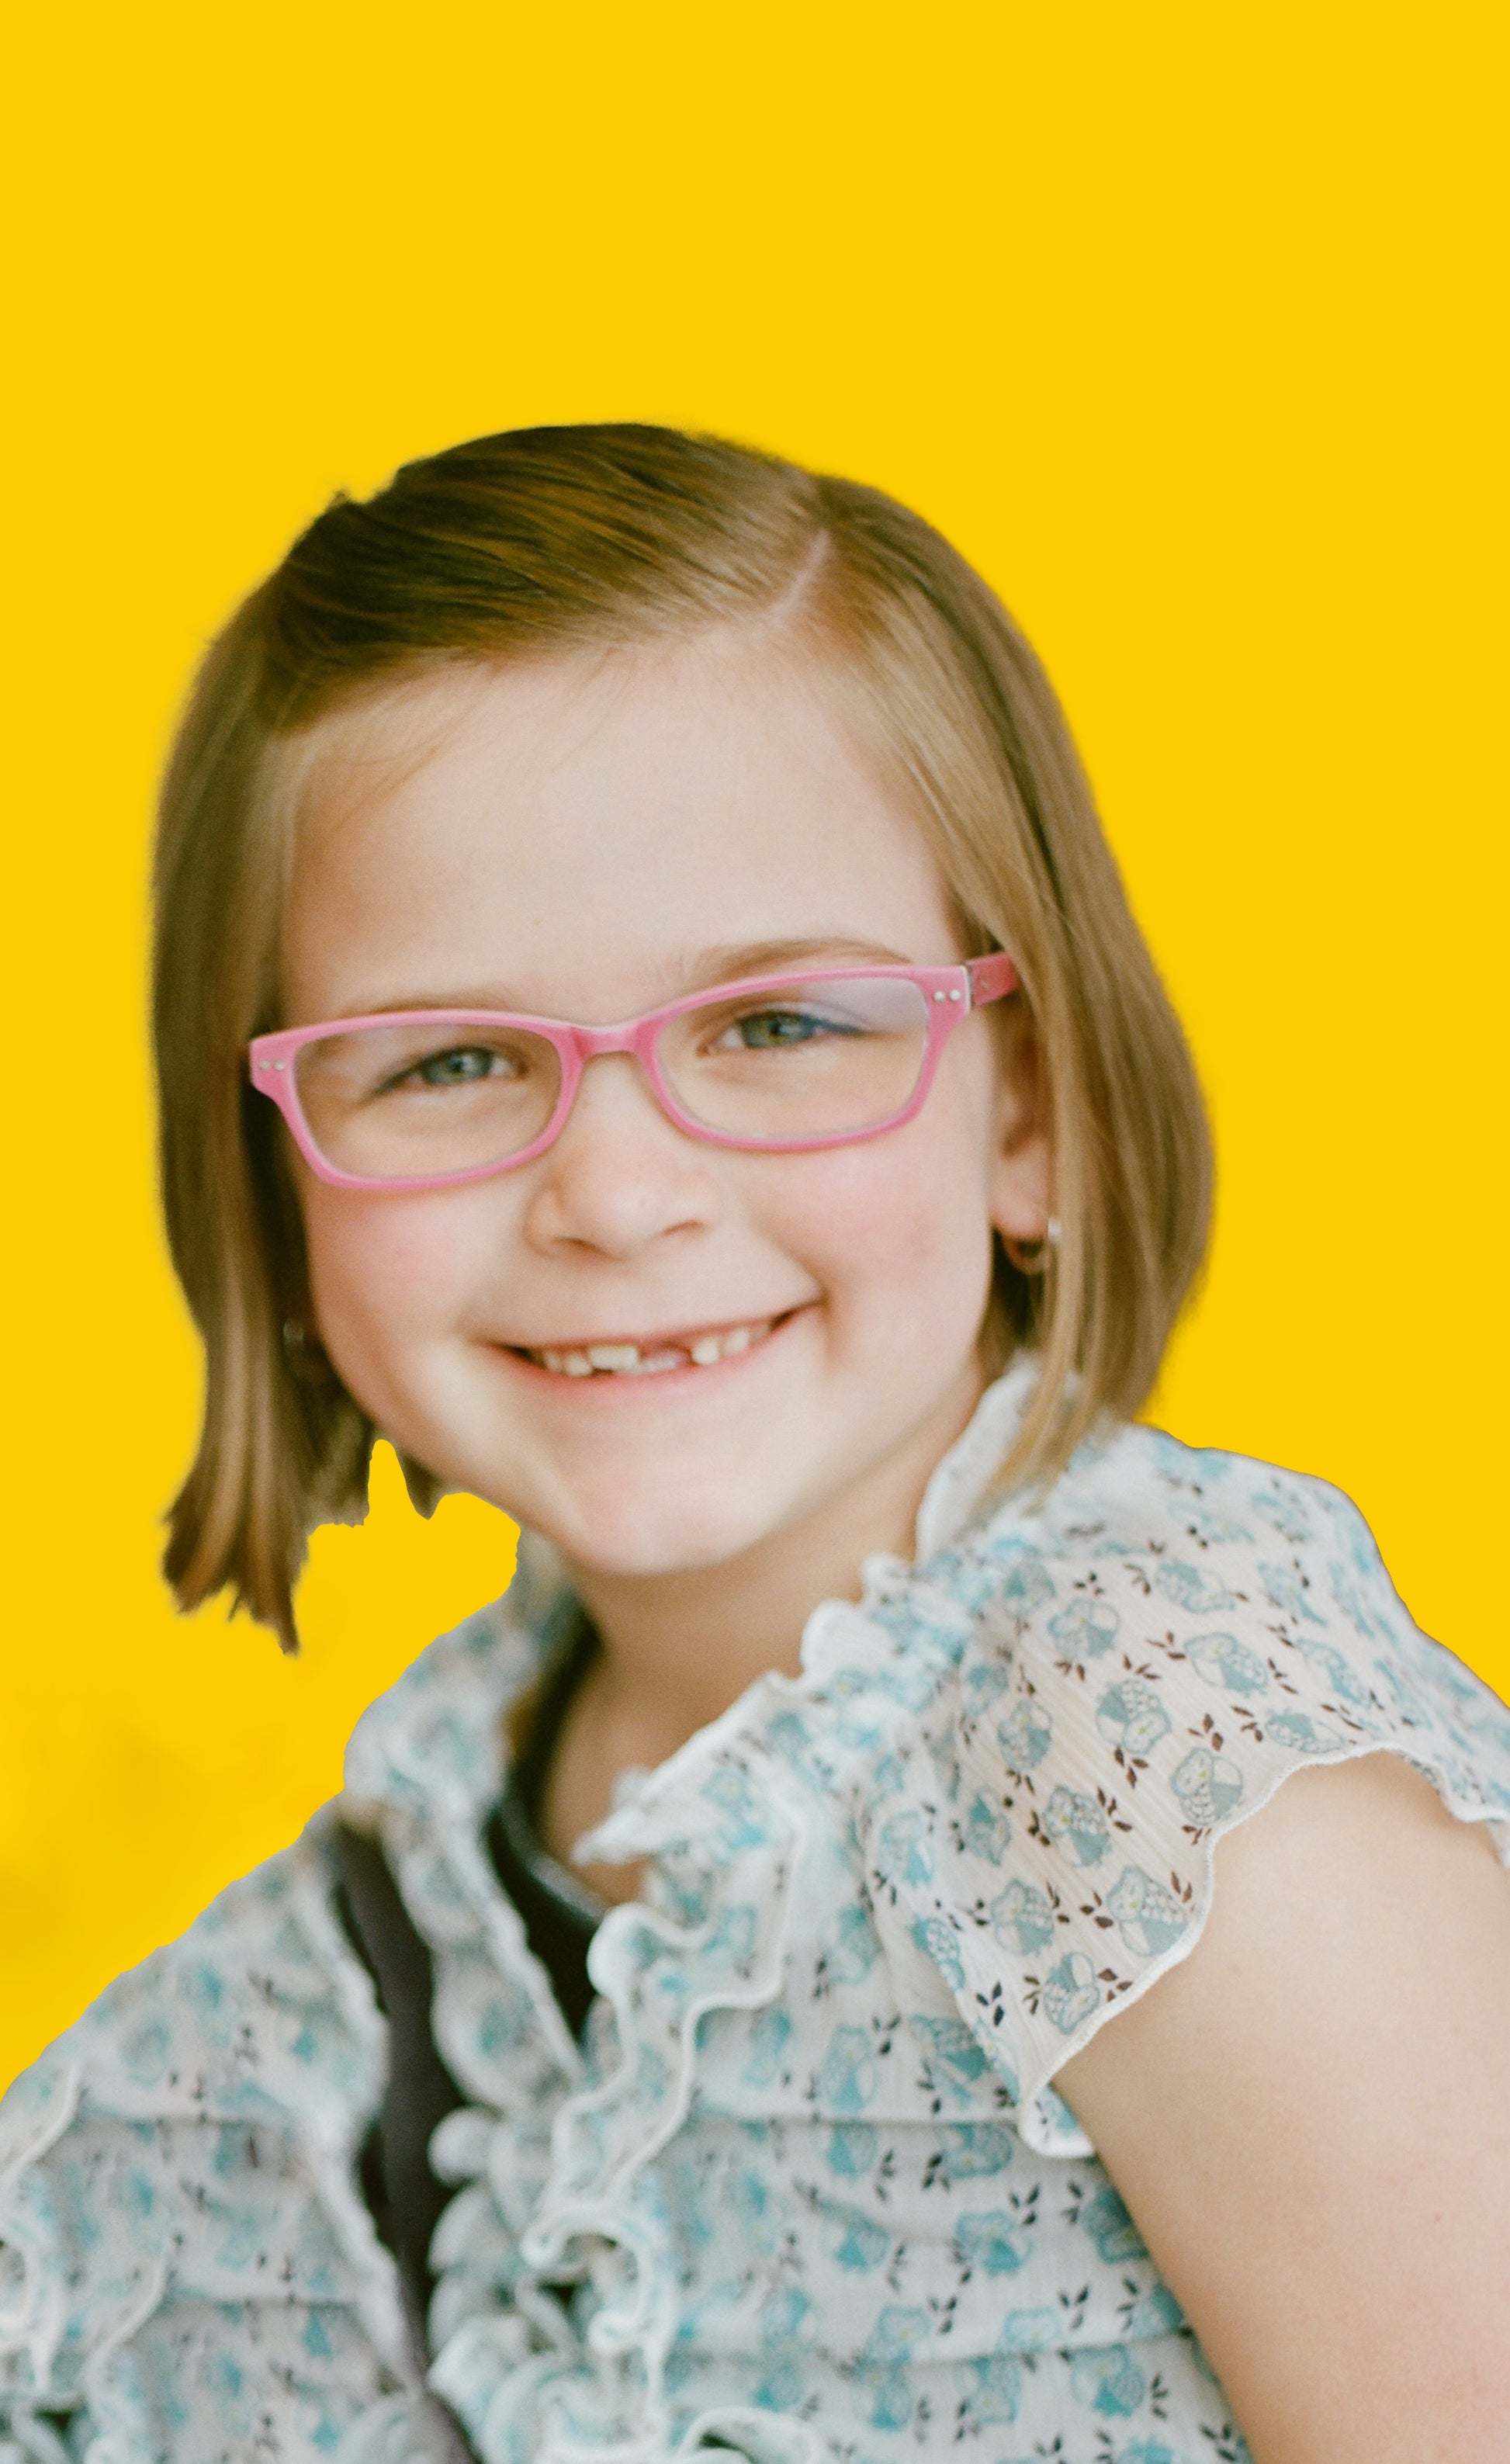 Buy 1 Get 1 Free Kids Round Blue-Black Frame KZ-303-B36 - Jubleelens: Eyeglass Jubleelens: Eyeglass